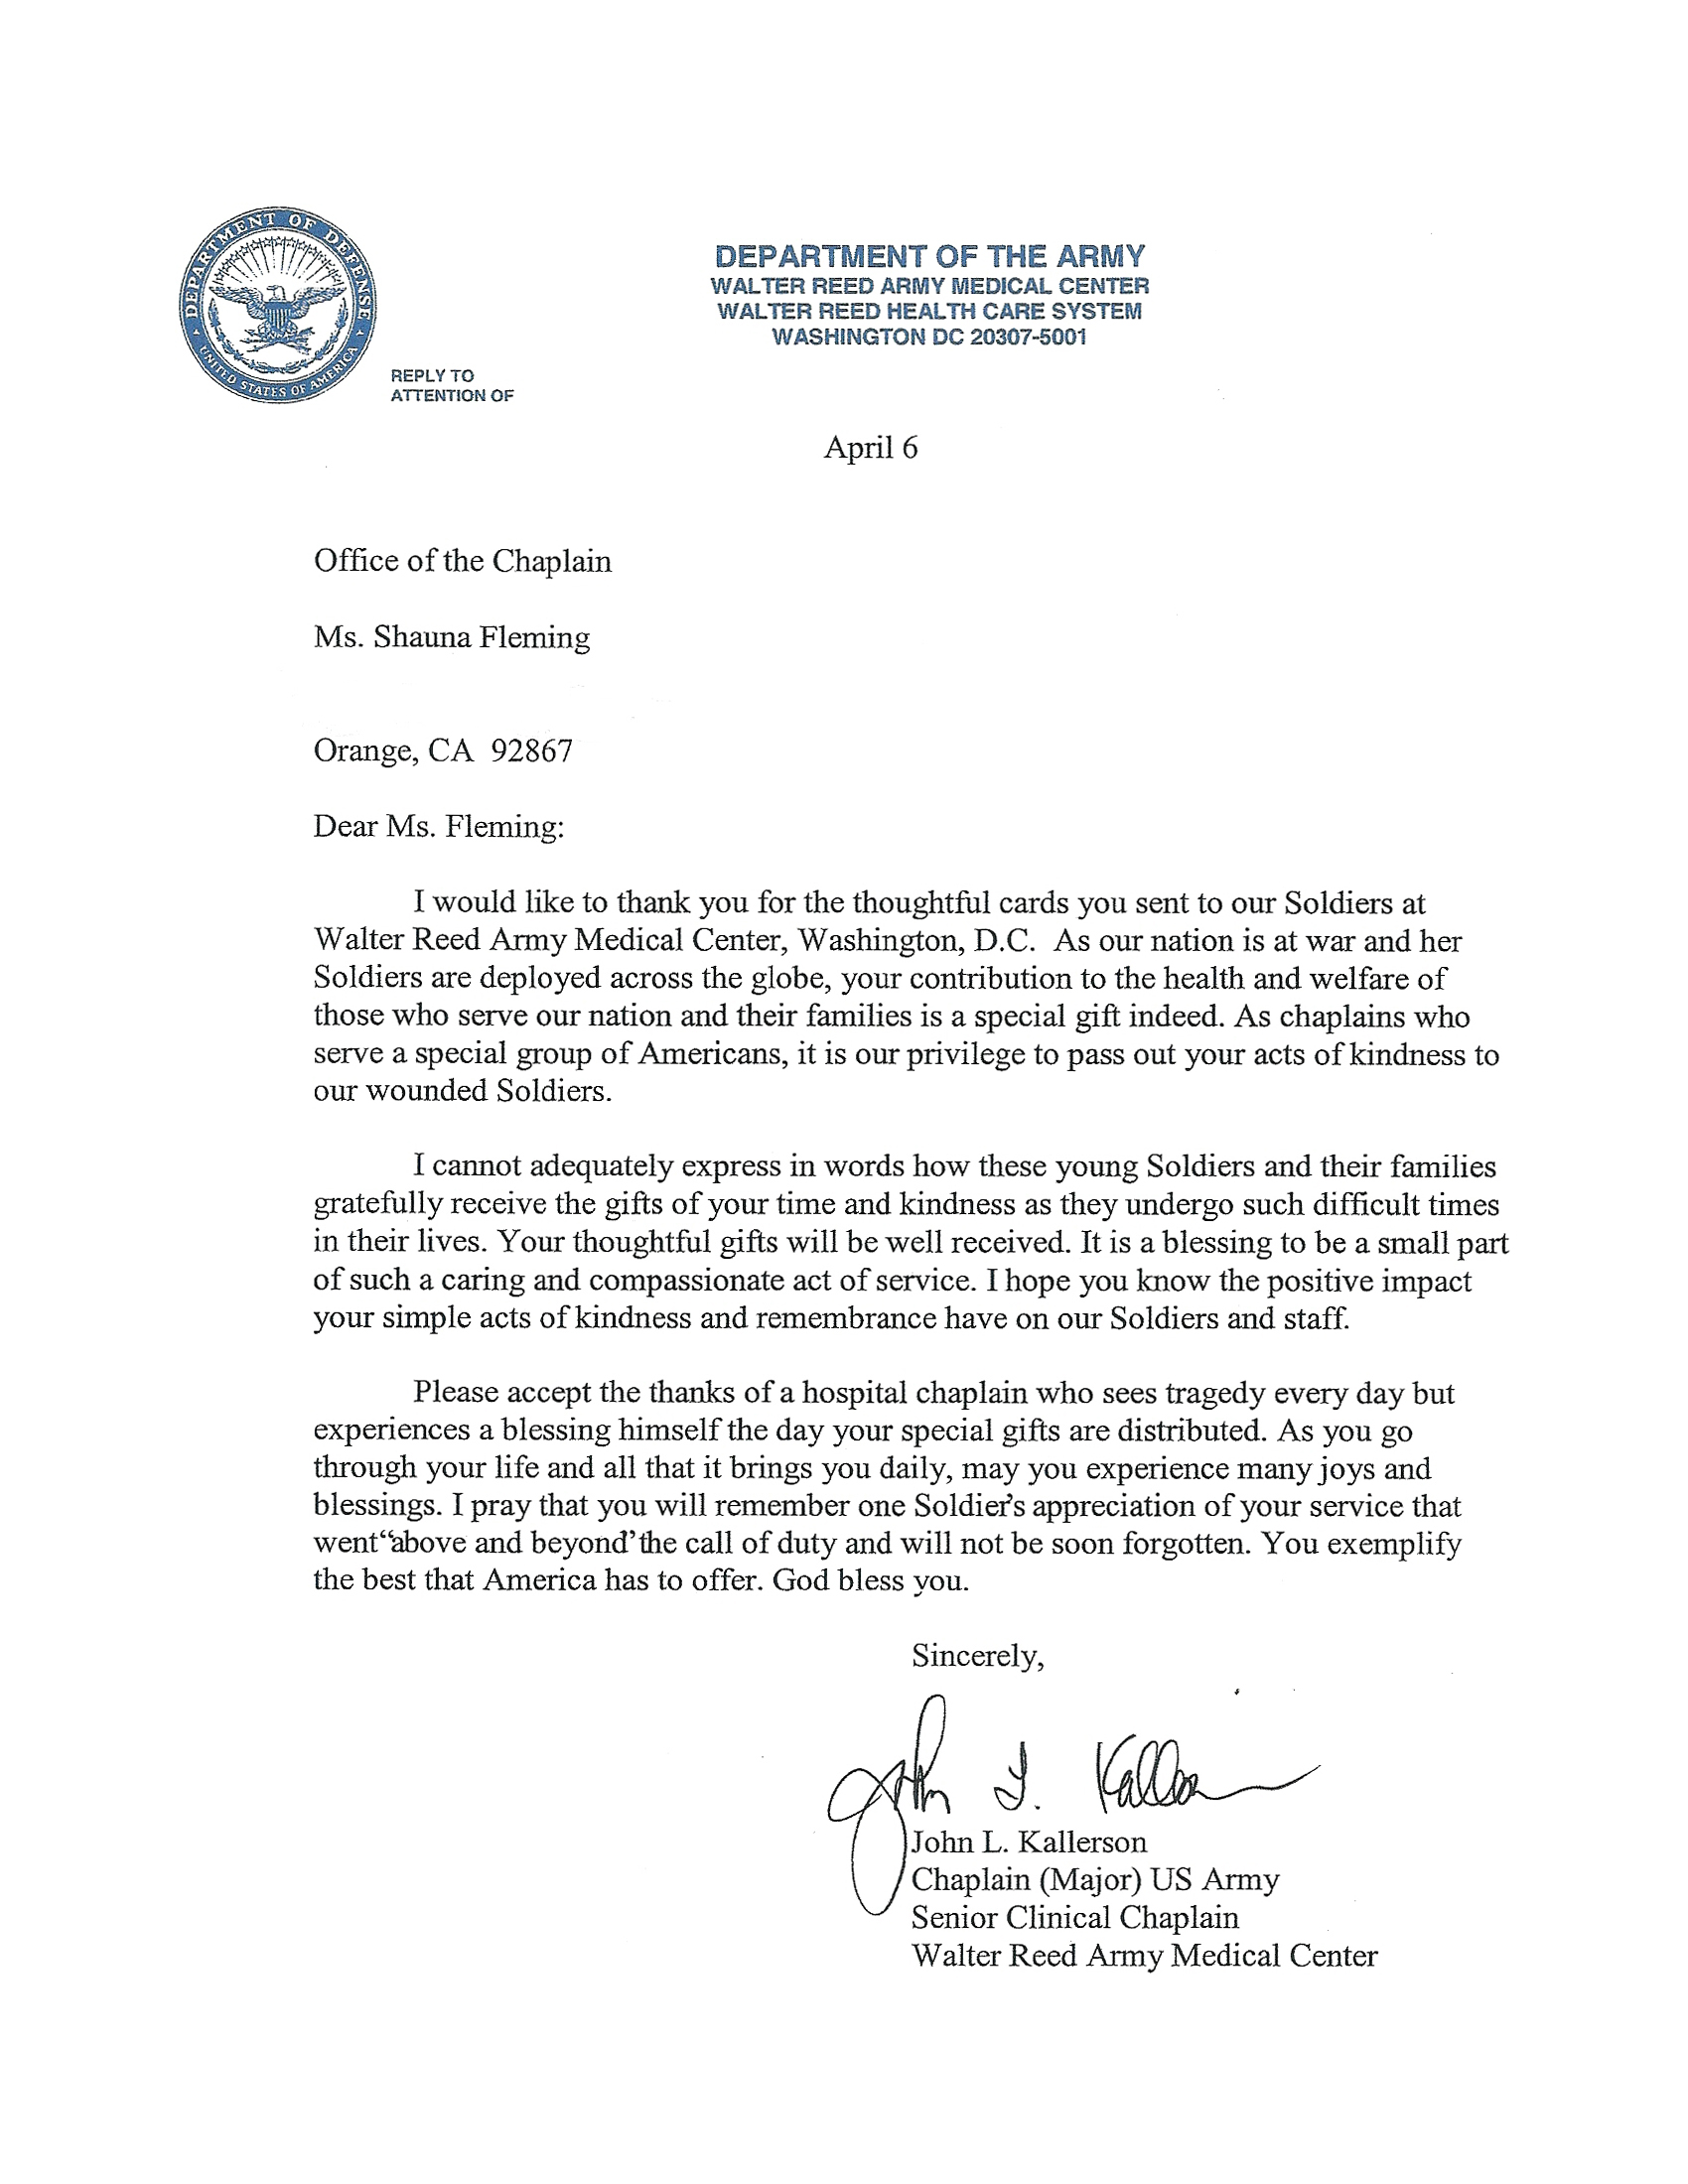 Military Letter Outstanding International Letter Format Examples 